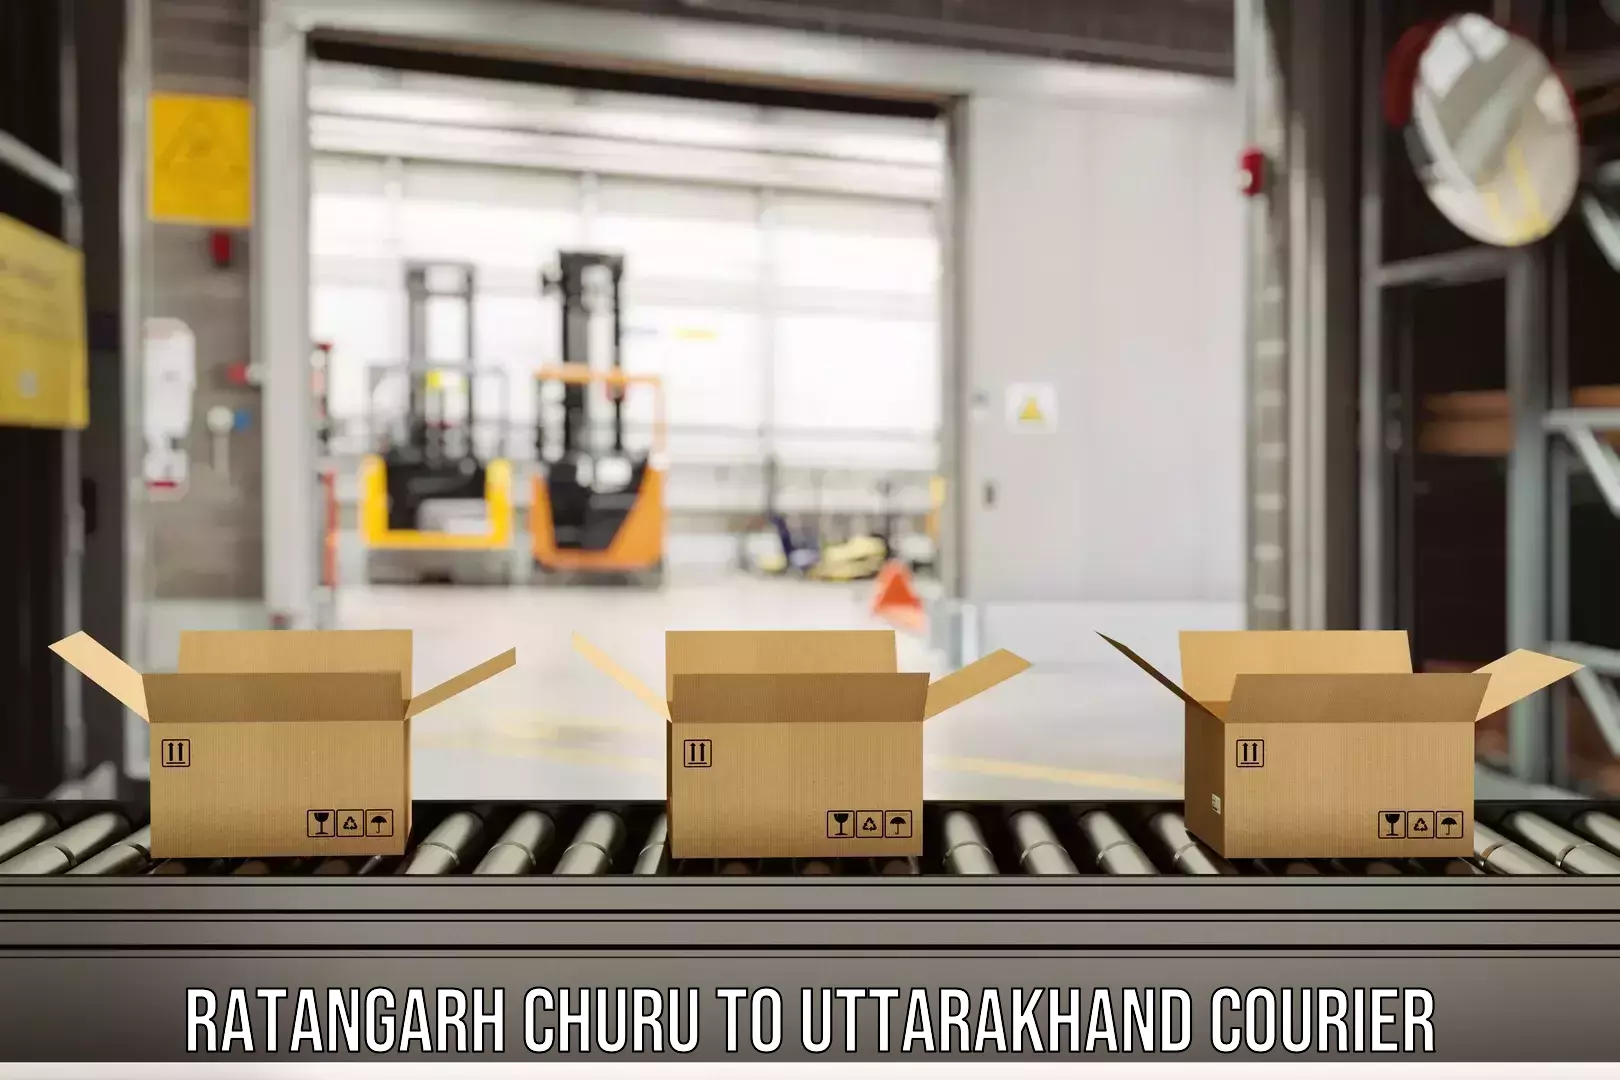 High-speed parcel service Ratangarh Churu to Haridwar